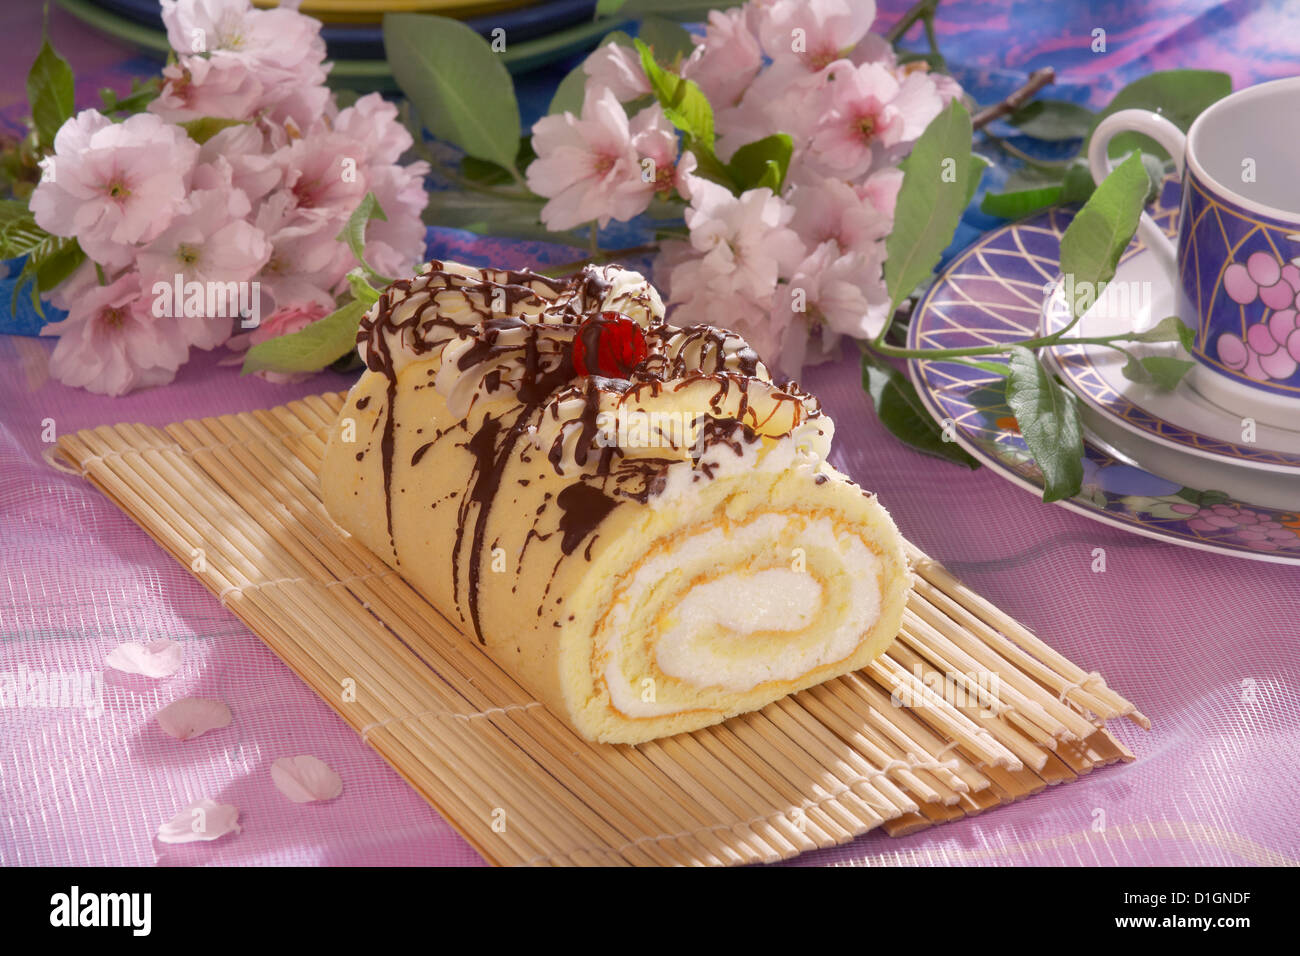 Rolled Vanilla Cake with chocolate glaze Stock Photo